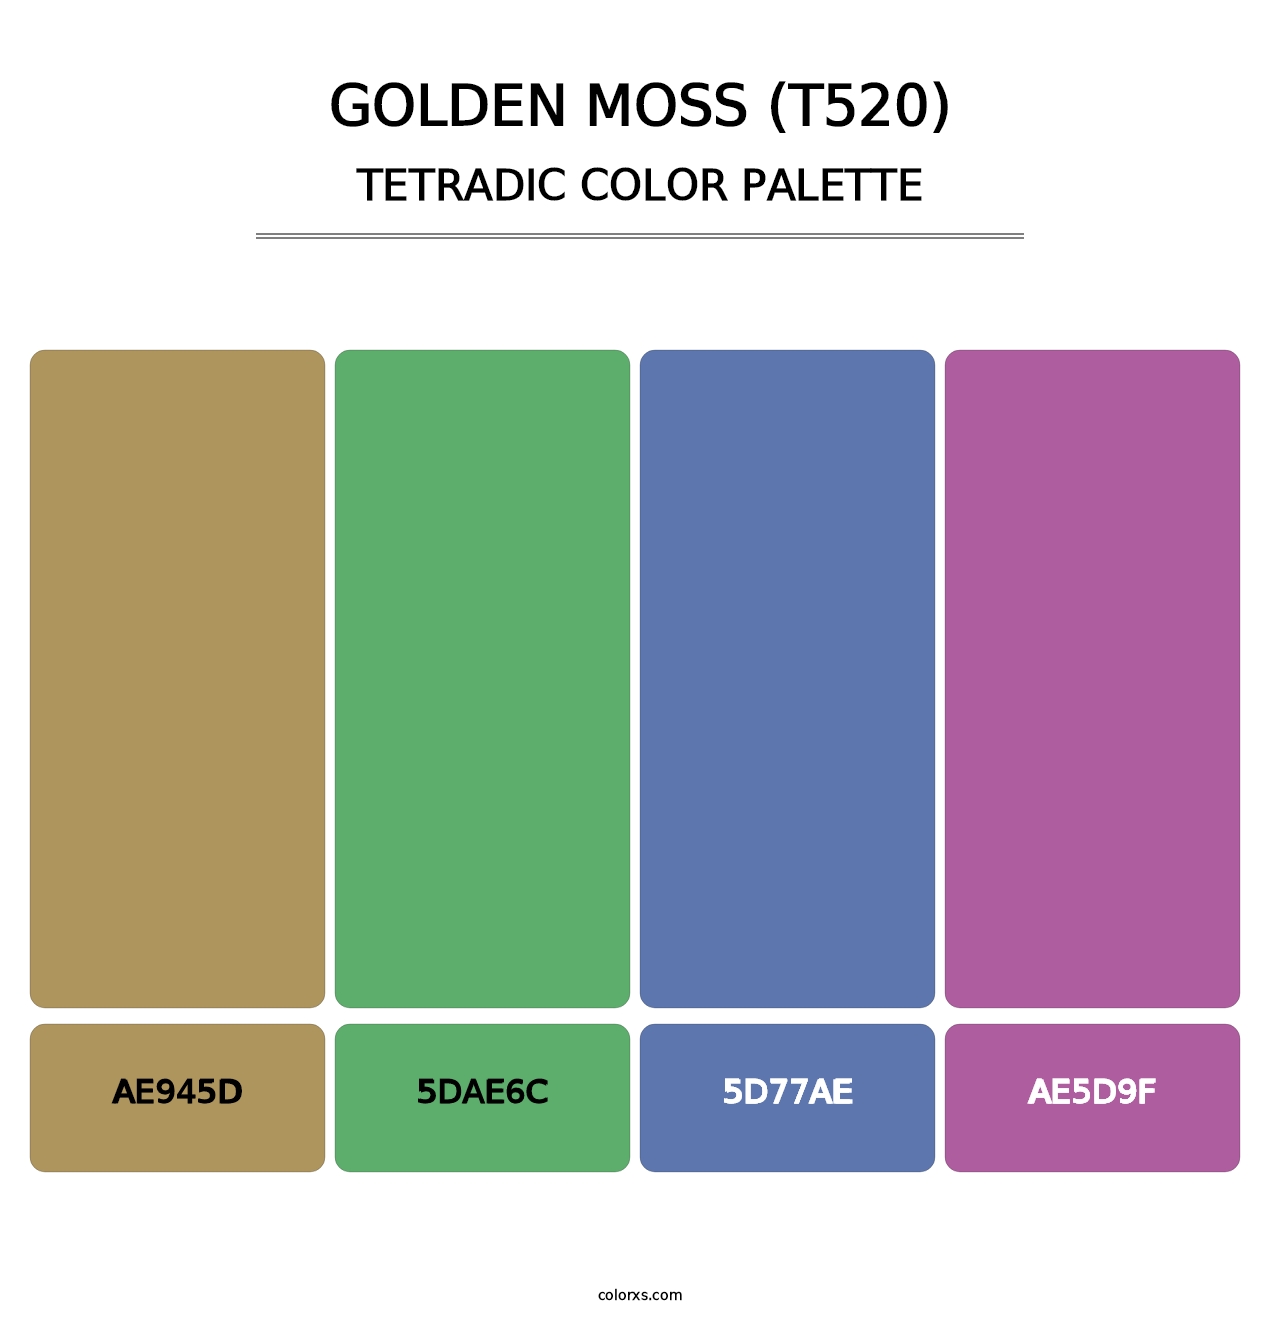 Golden Moss (T520) - Tetradic Color Palette